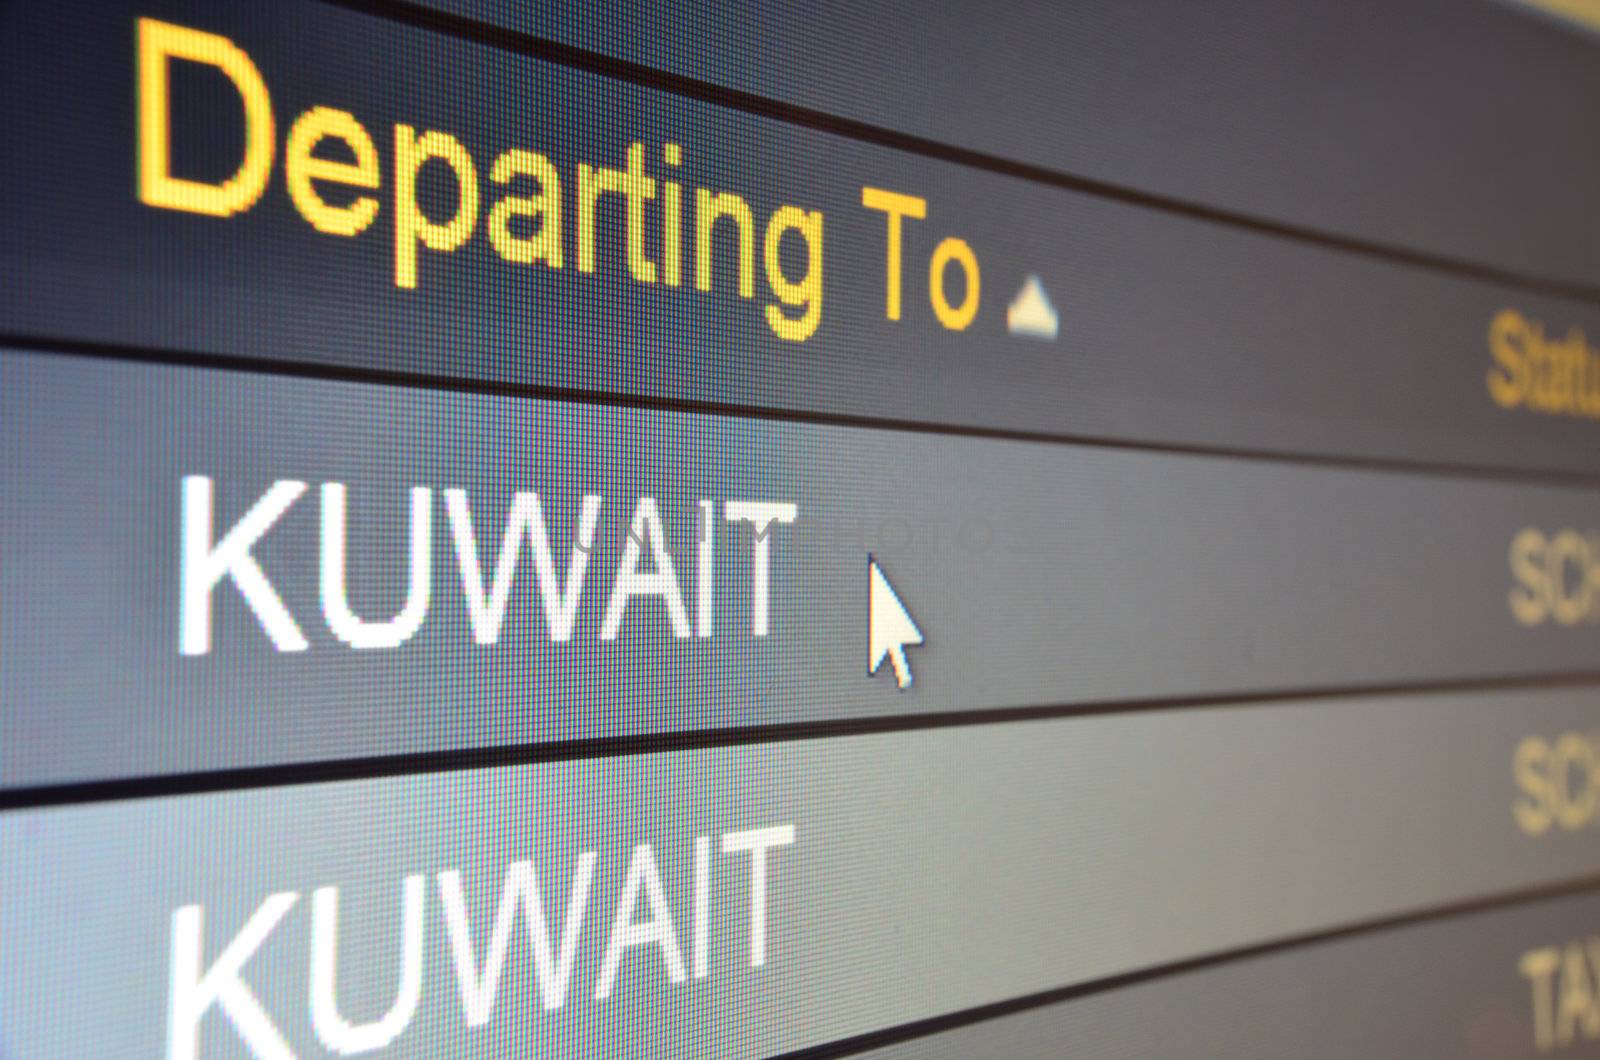 Flight departing to Kuwait by artofphoto